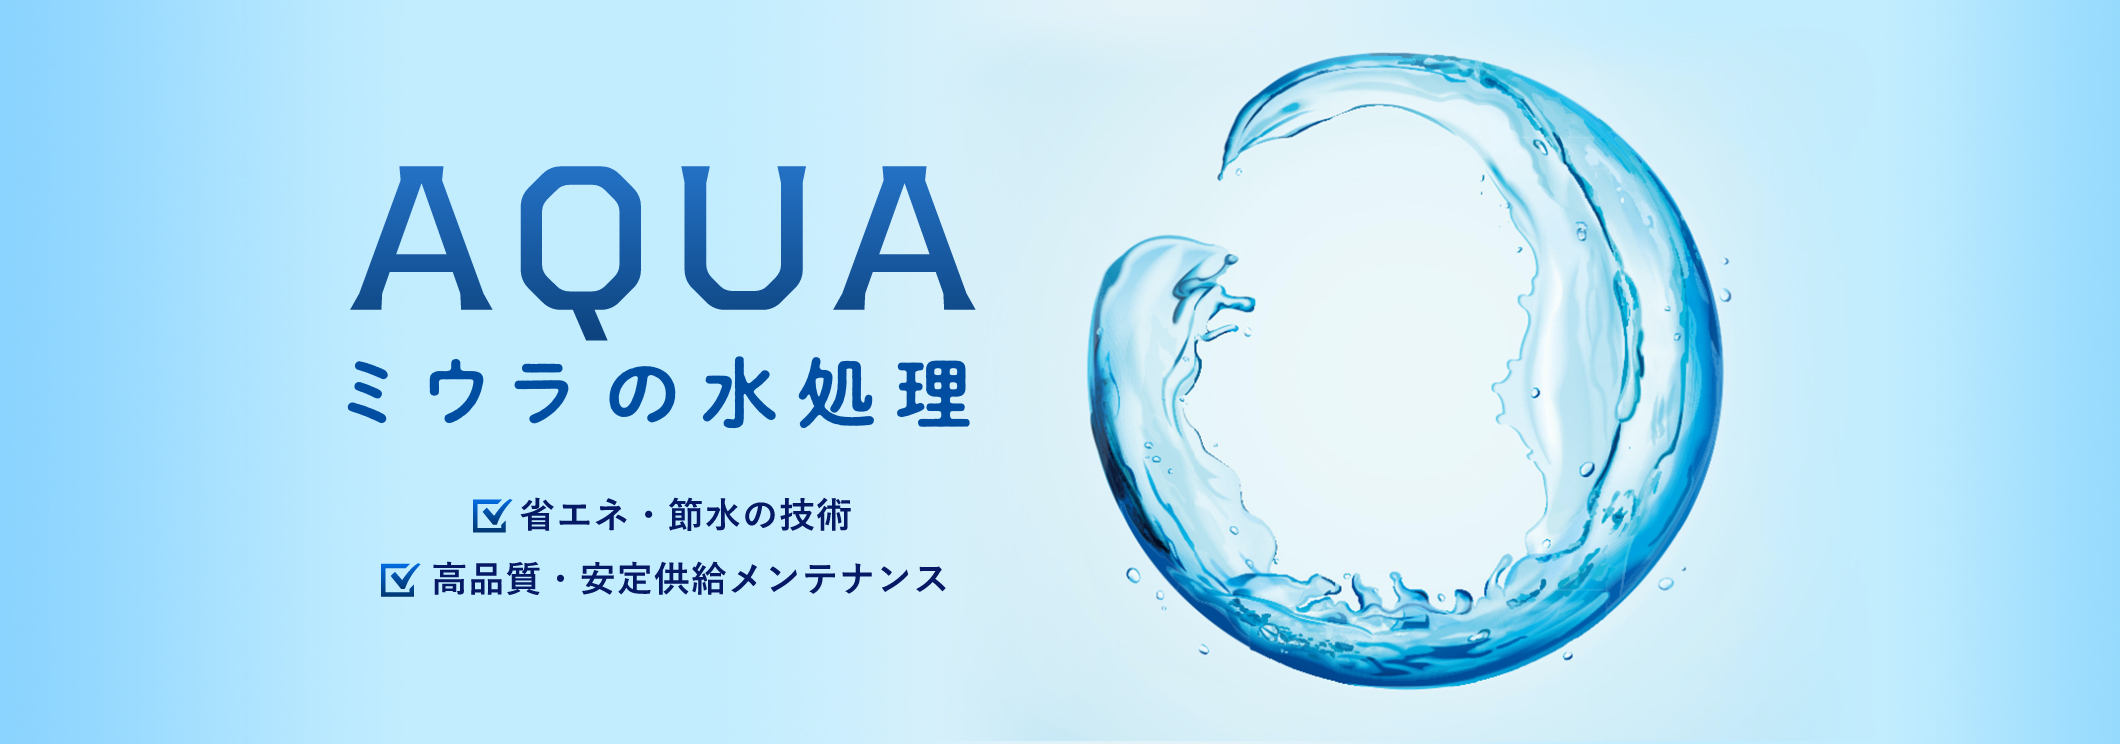 AQUA ミウラの水処理。省エネ・節水の技術、高品質・安定供給メンテナンス。